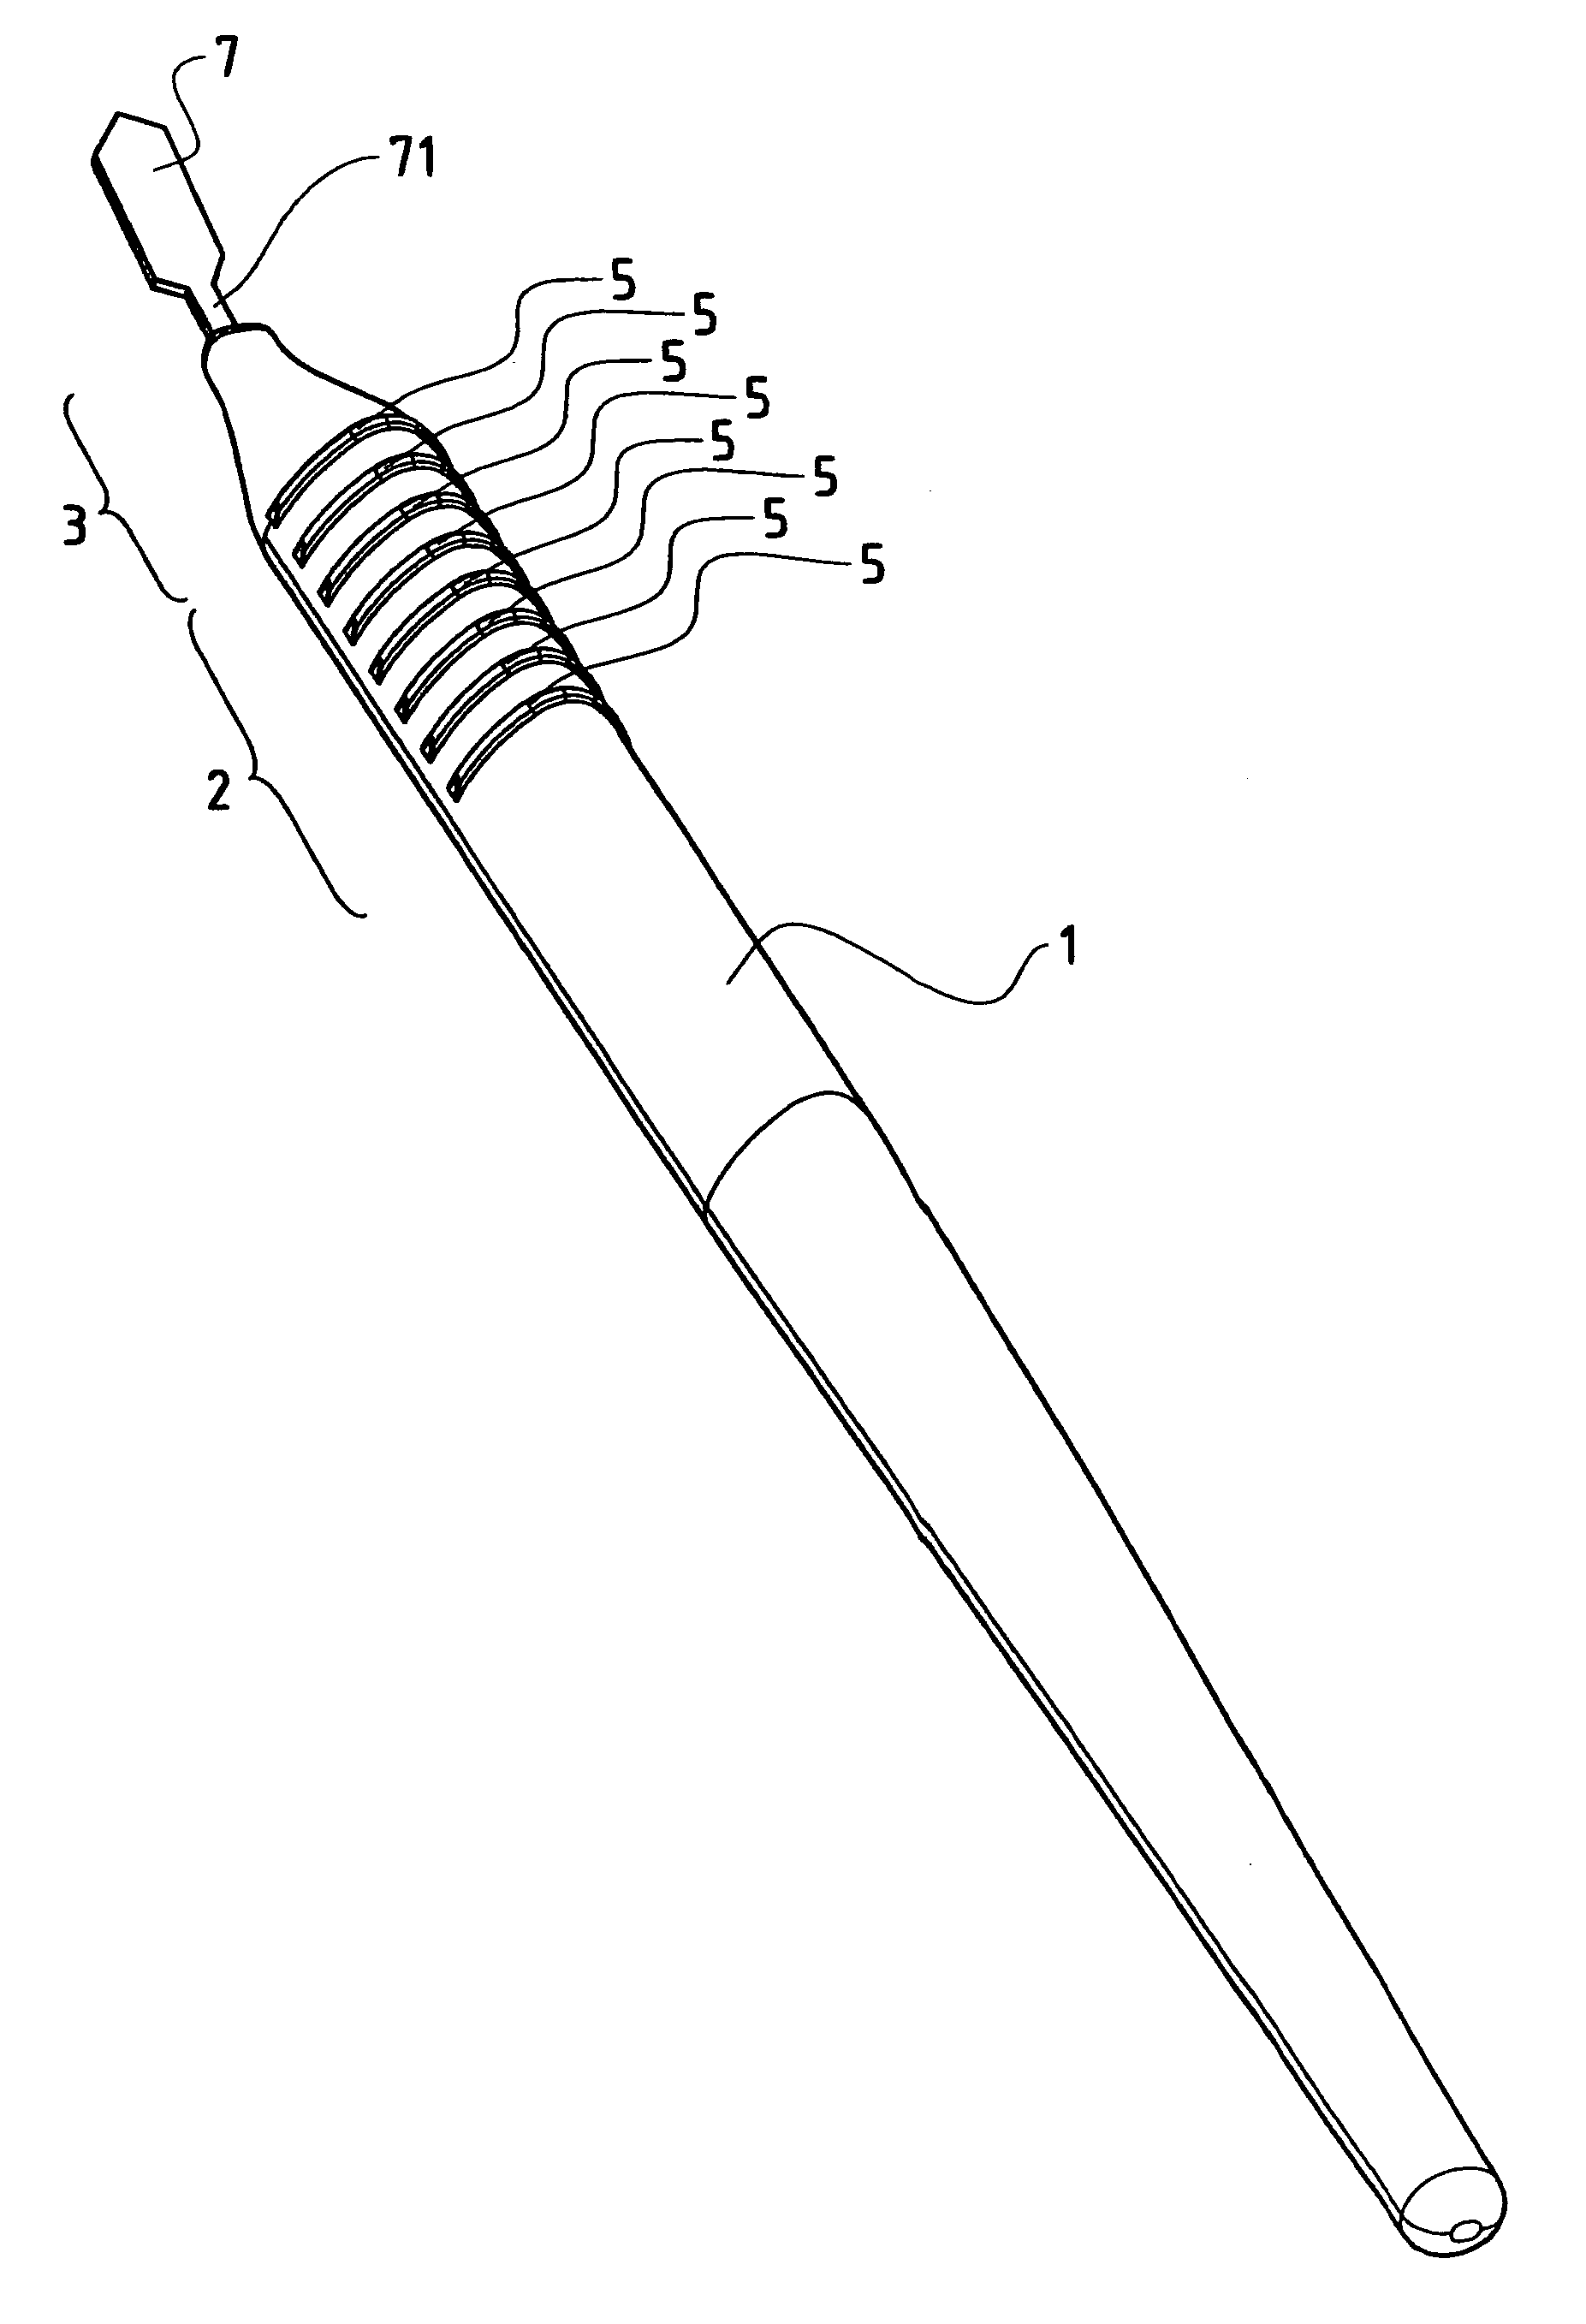 Scalpel blade holder and scalpel